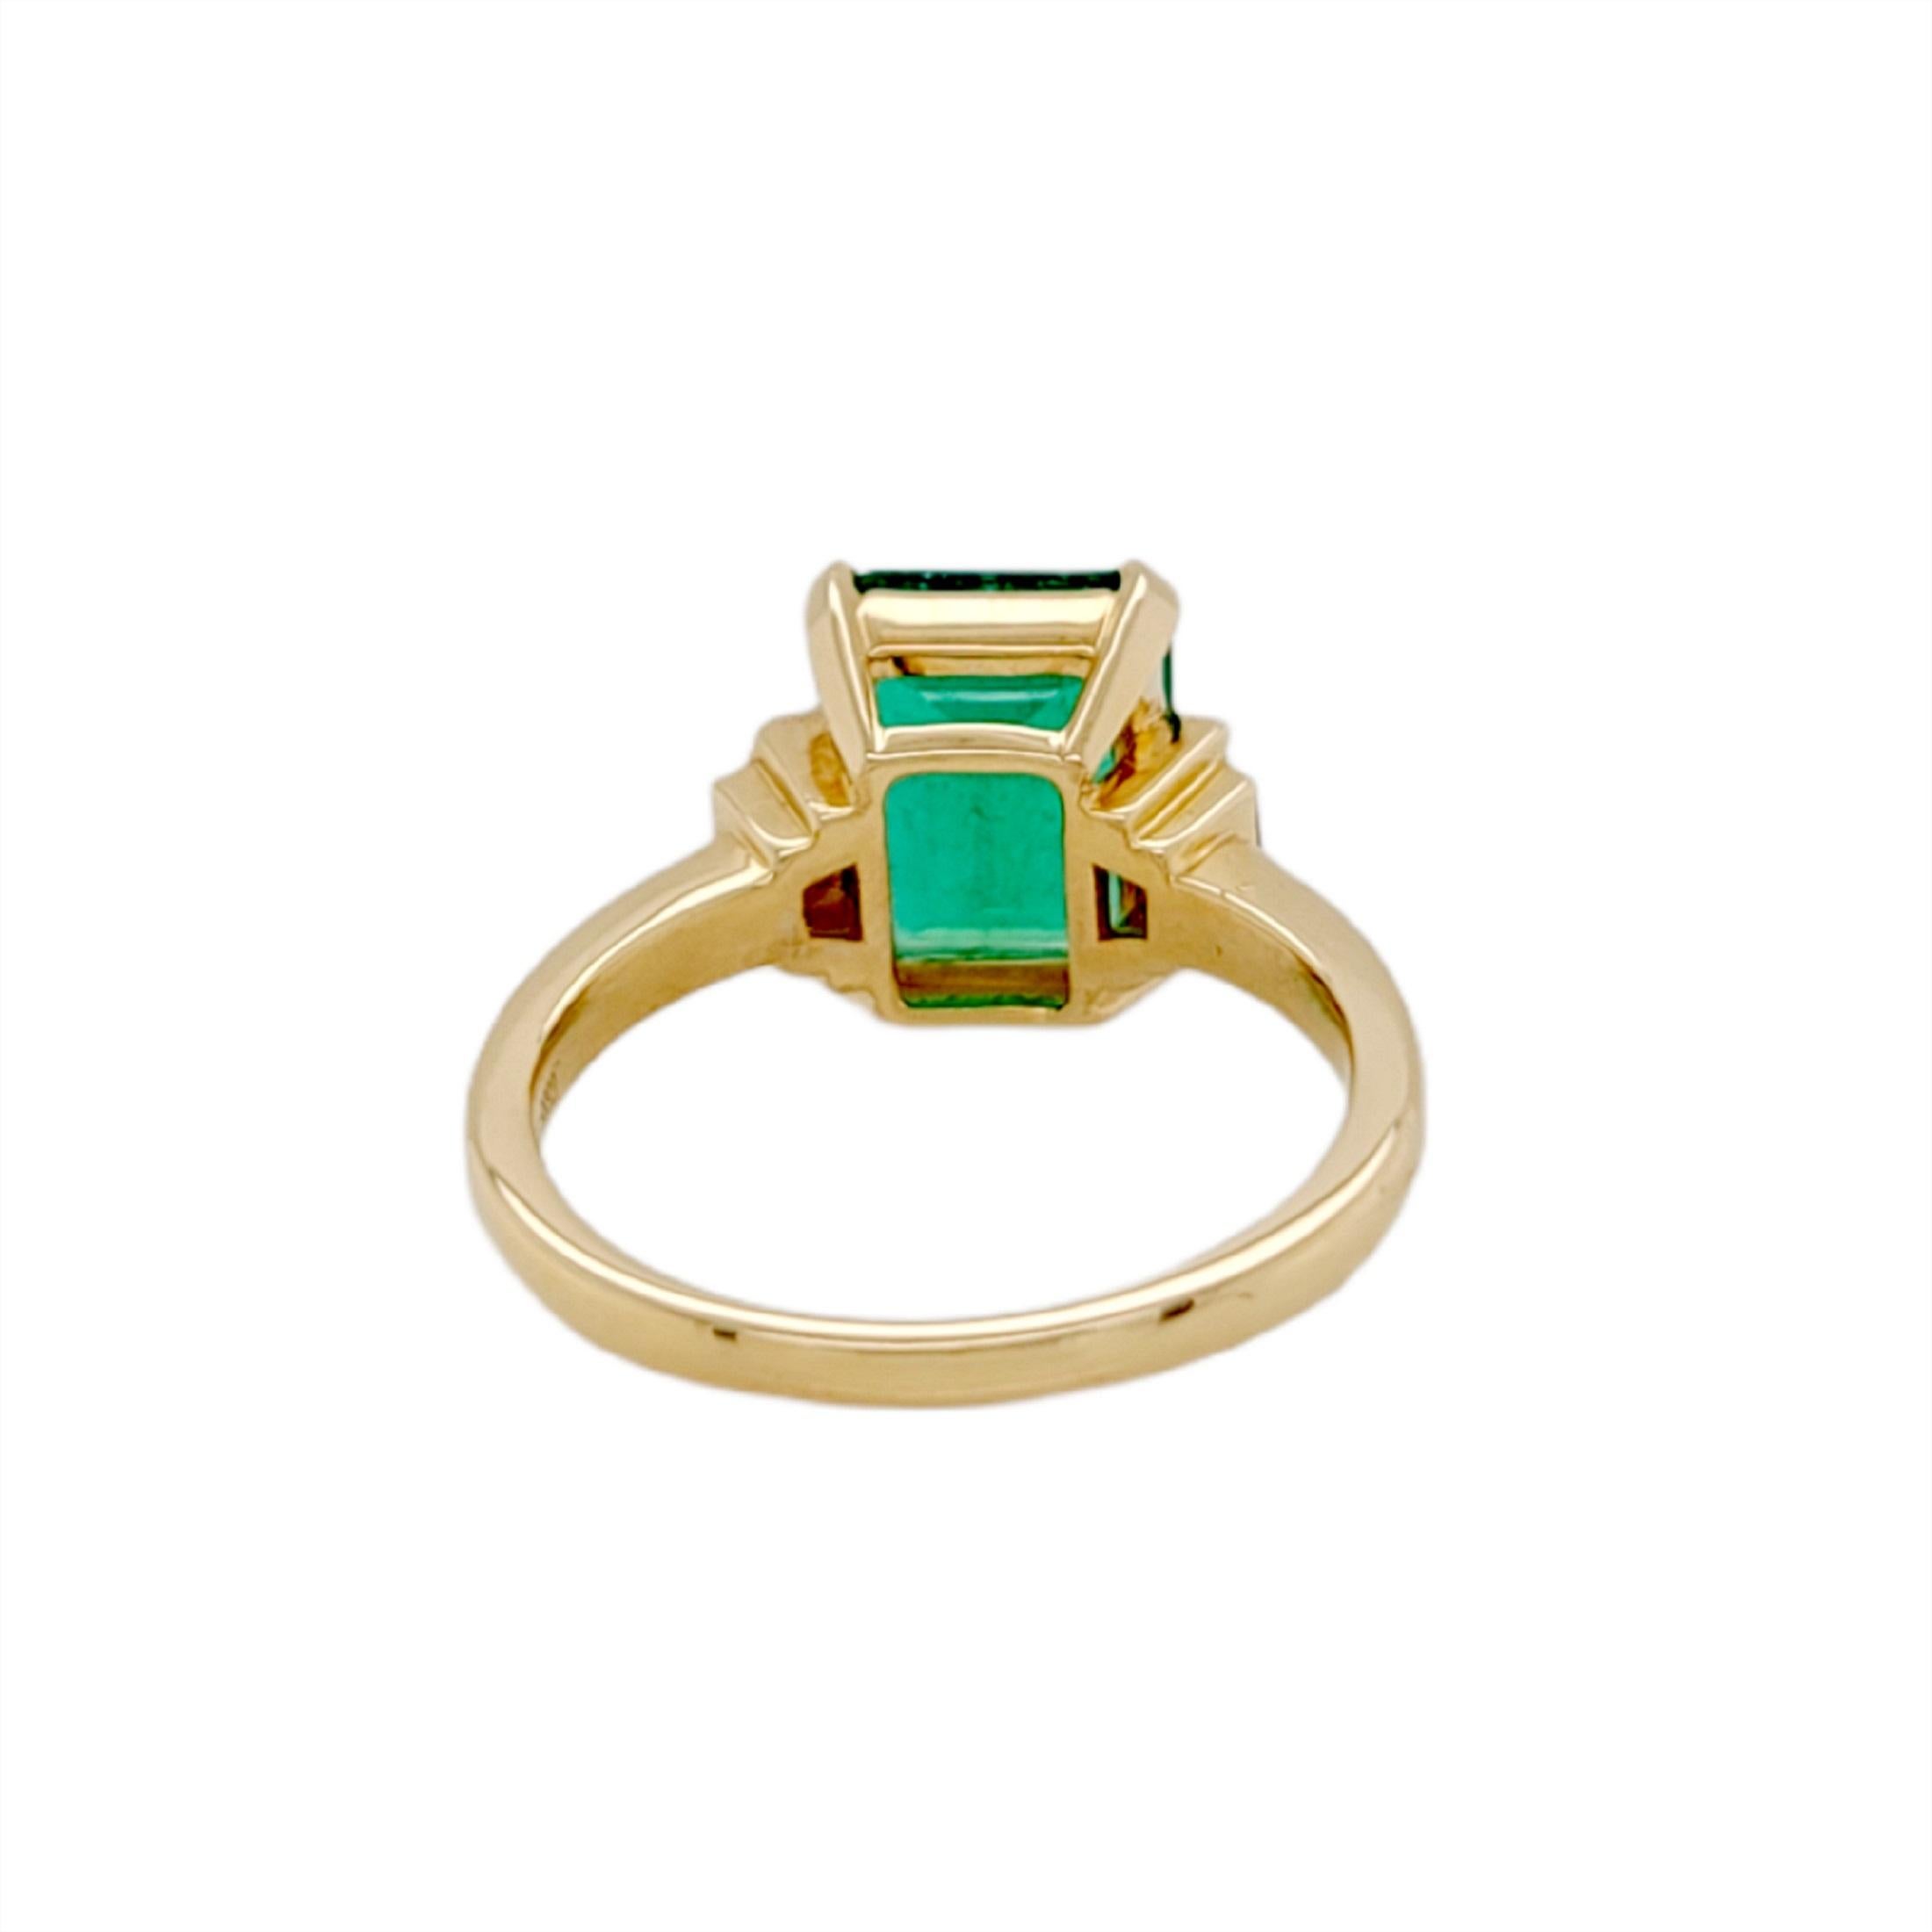 Emerald Cut 2.48 Ct Zambian Emerald & 0.18 Ct Diamonds in 14k Yellow Gold Engagement Ring